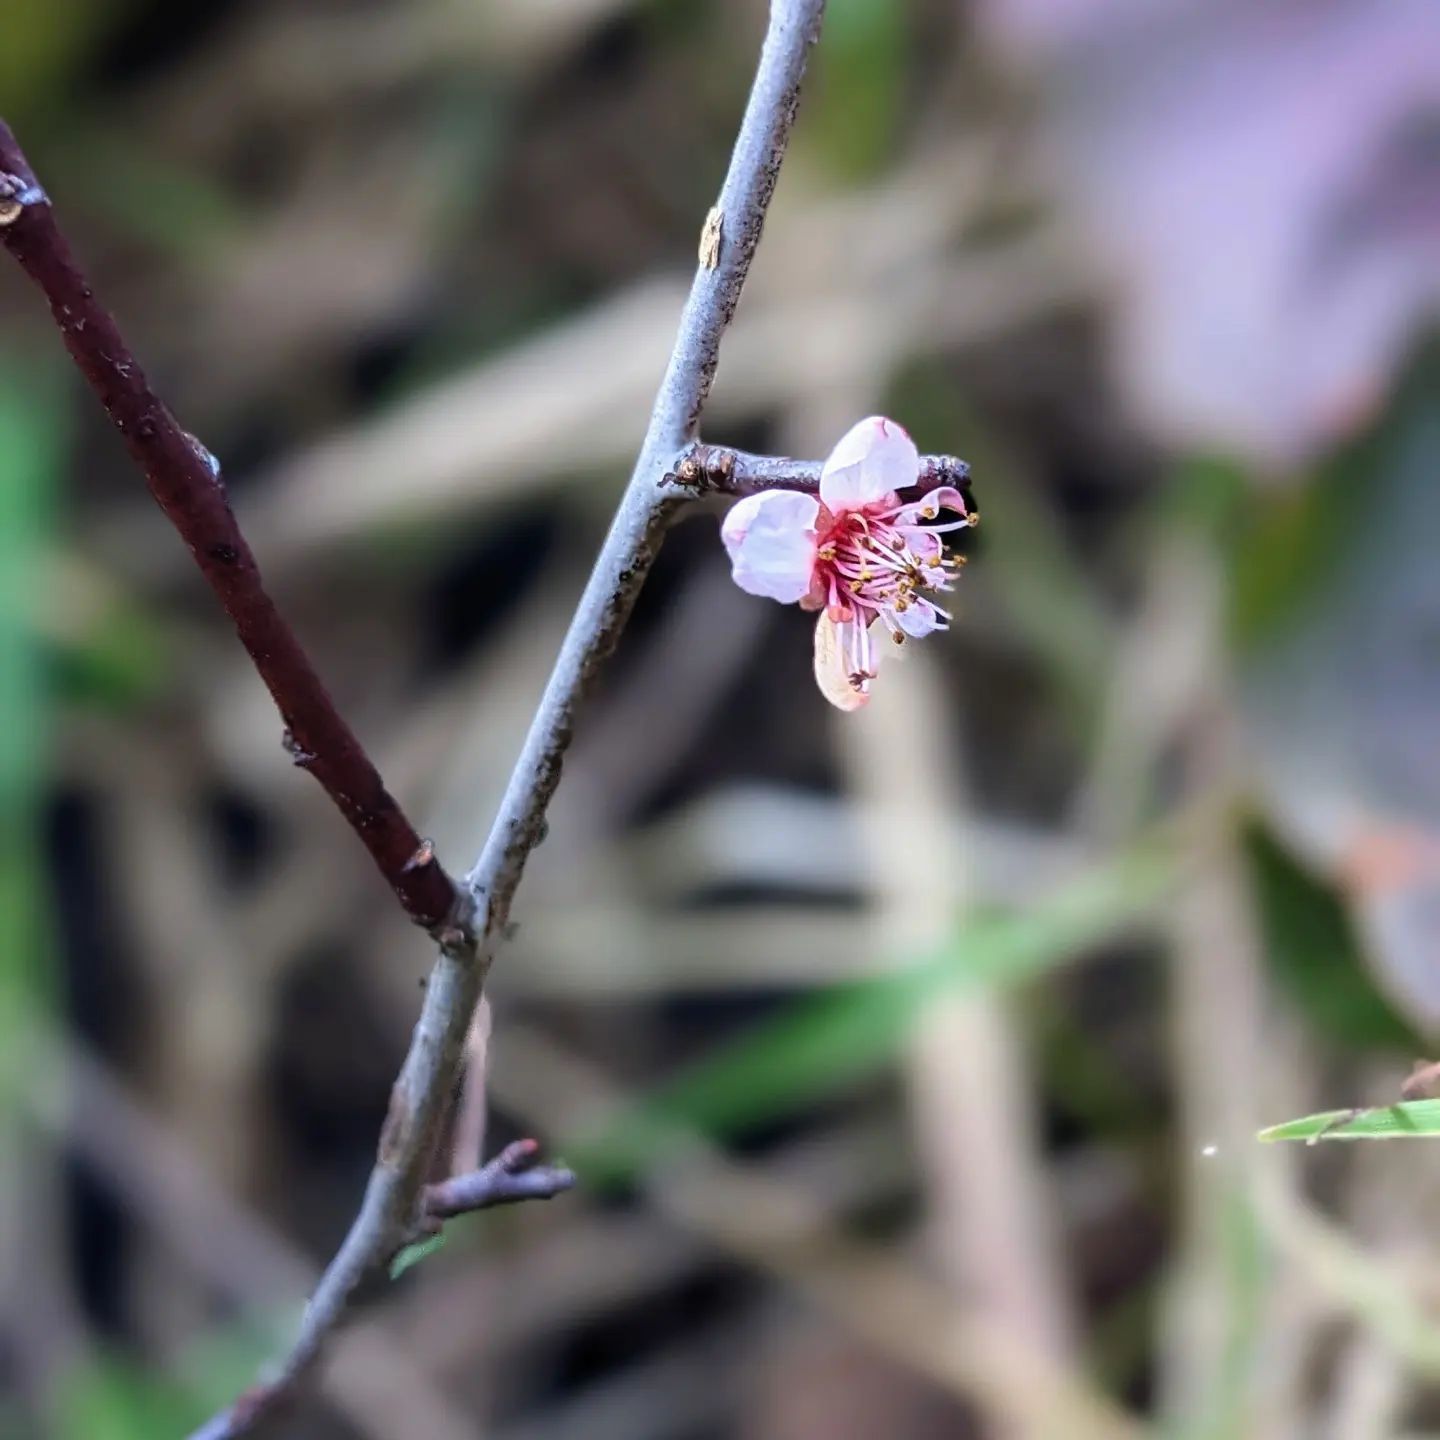 Flowering cherry plum (cerejeira brava / prunus cerasifera)